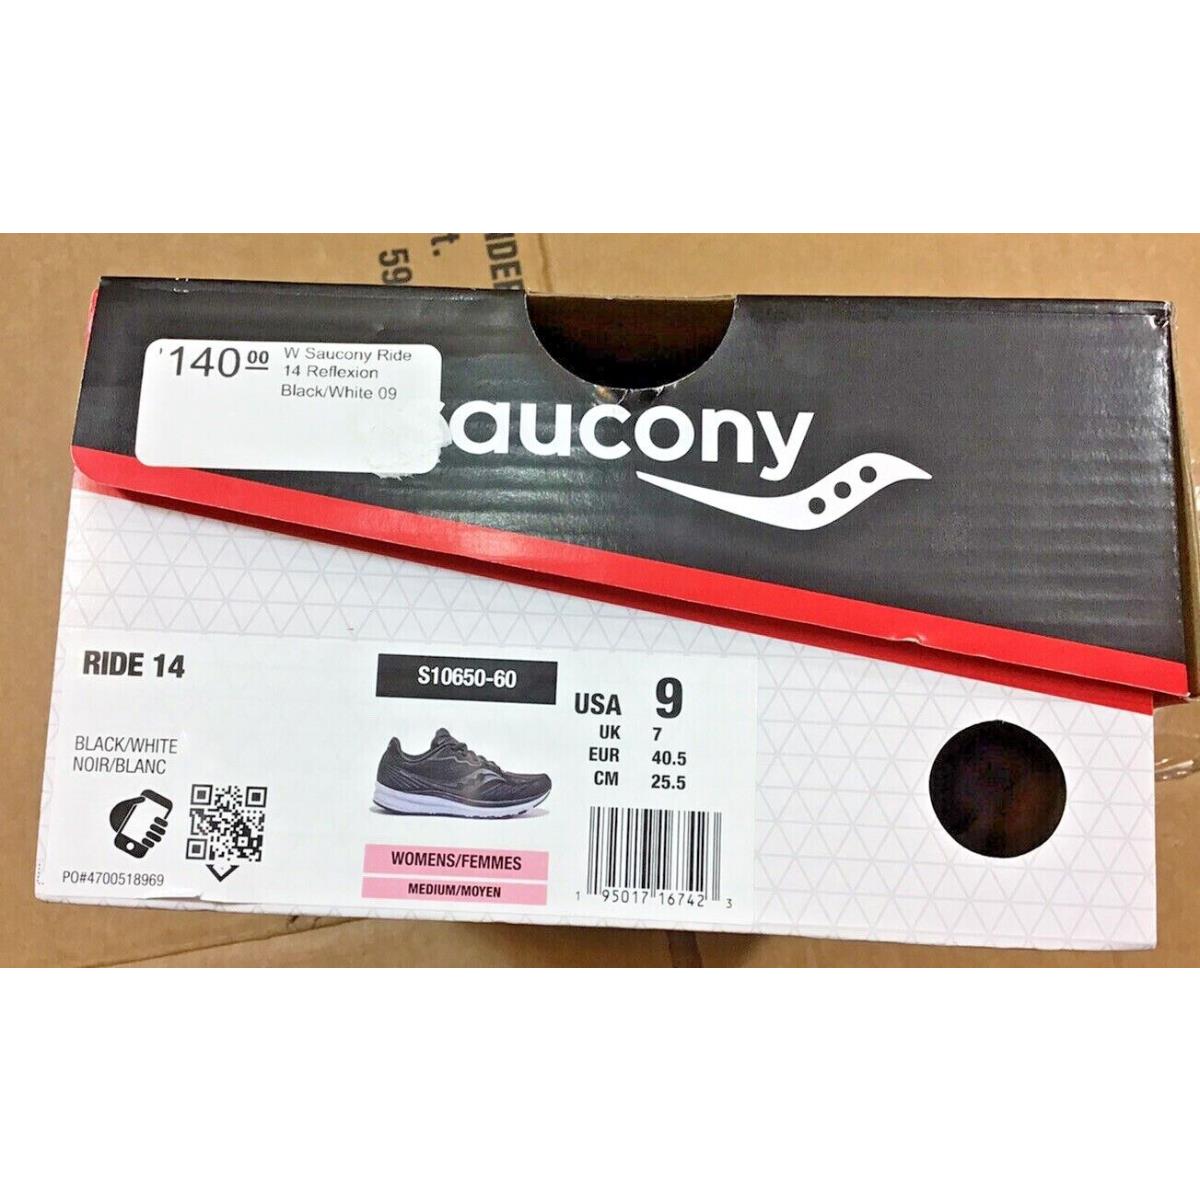 Saucony shoes  - Black/White 4